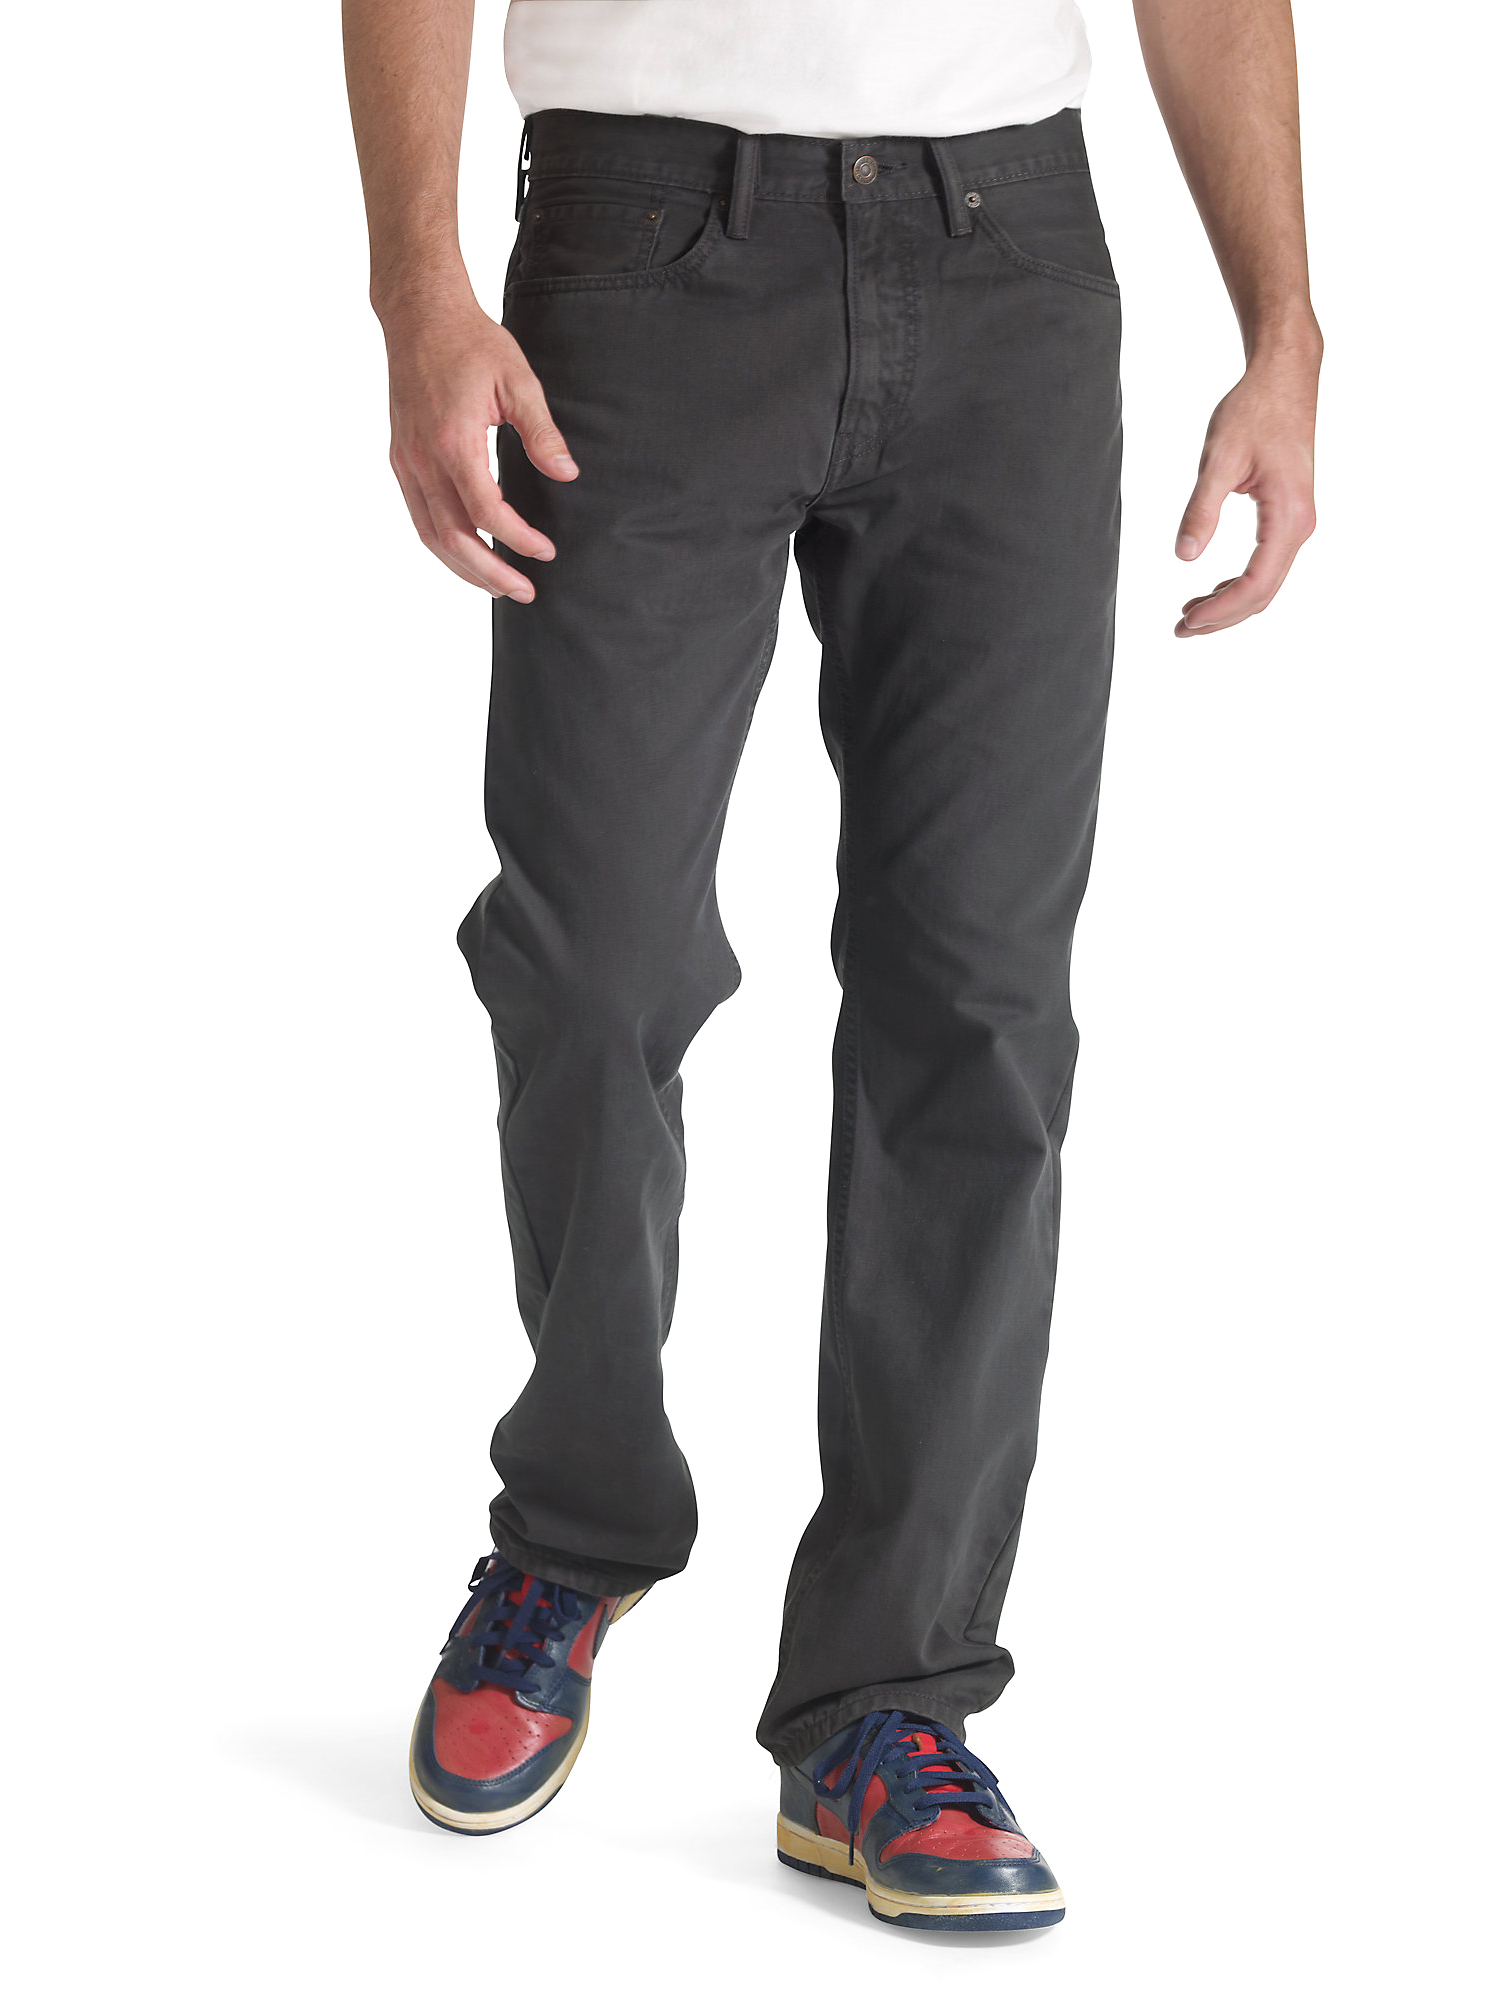 Levis Men's 505 Regular Fit Jeans - image 1 of 3